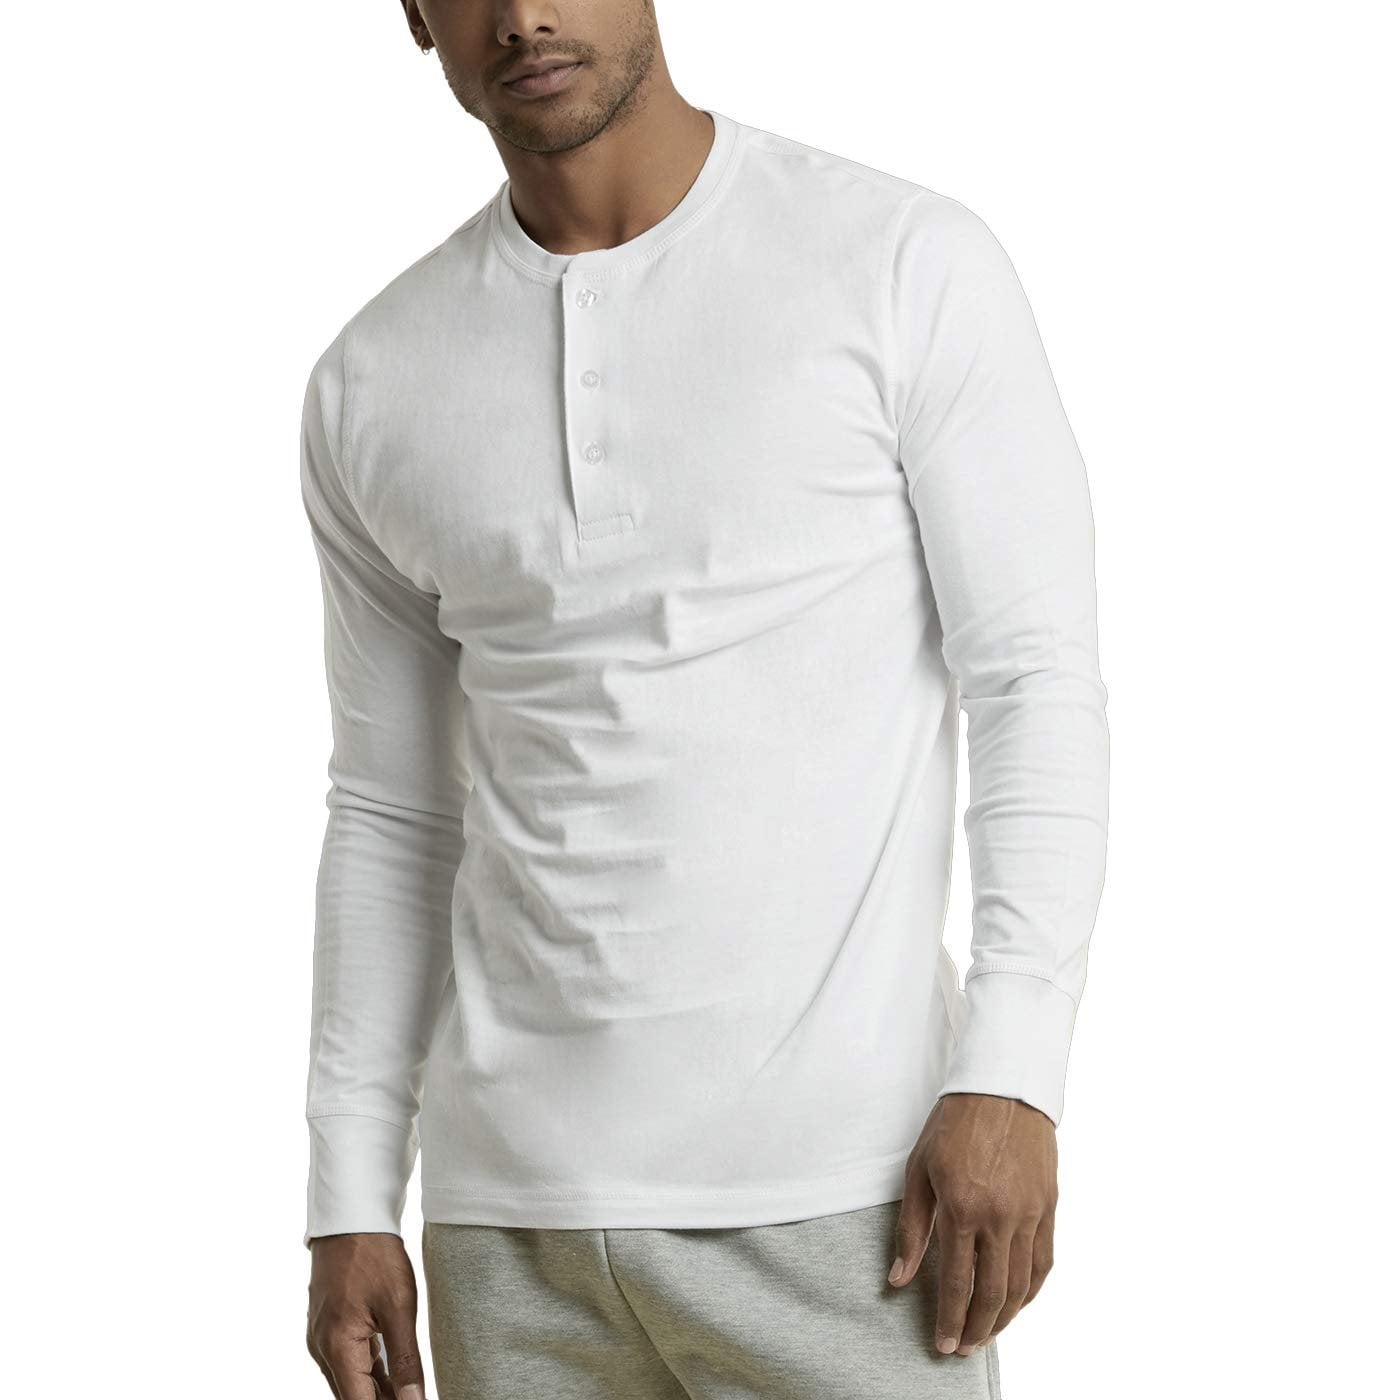 KUYIGO Mens Slim Fit Longt & Short Sleeve Beefy Fashion Casual Henley T Shirts of Cotton Shirts